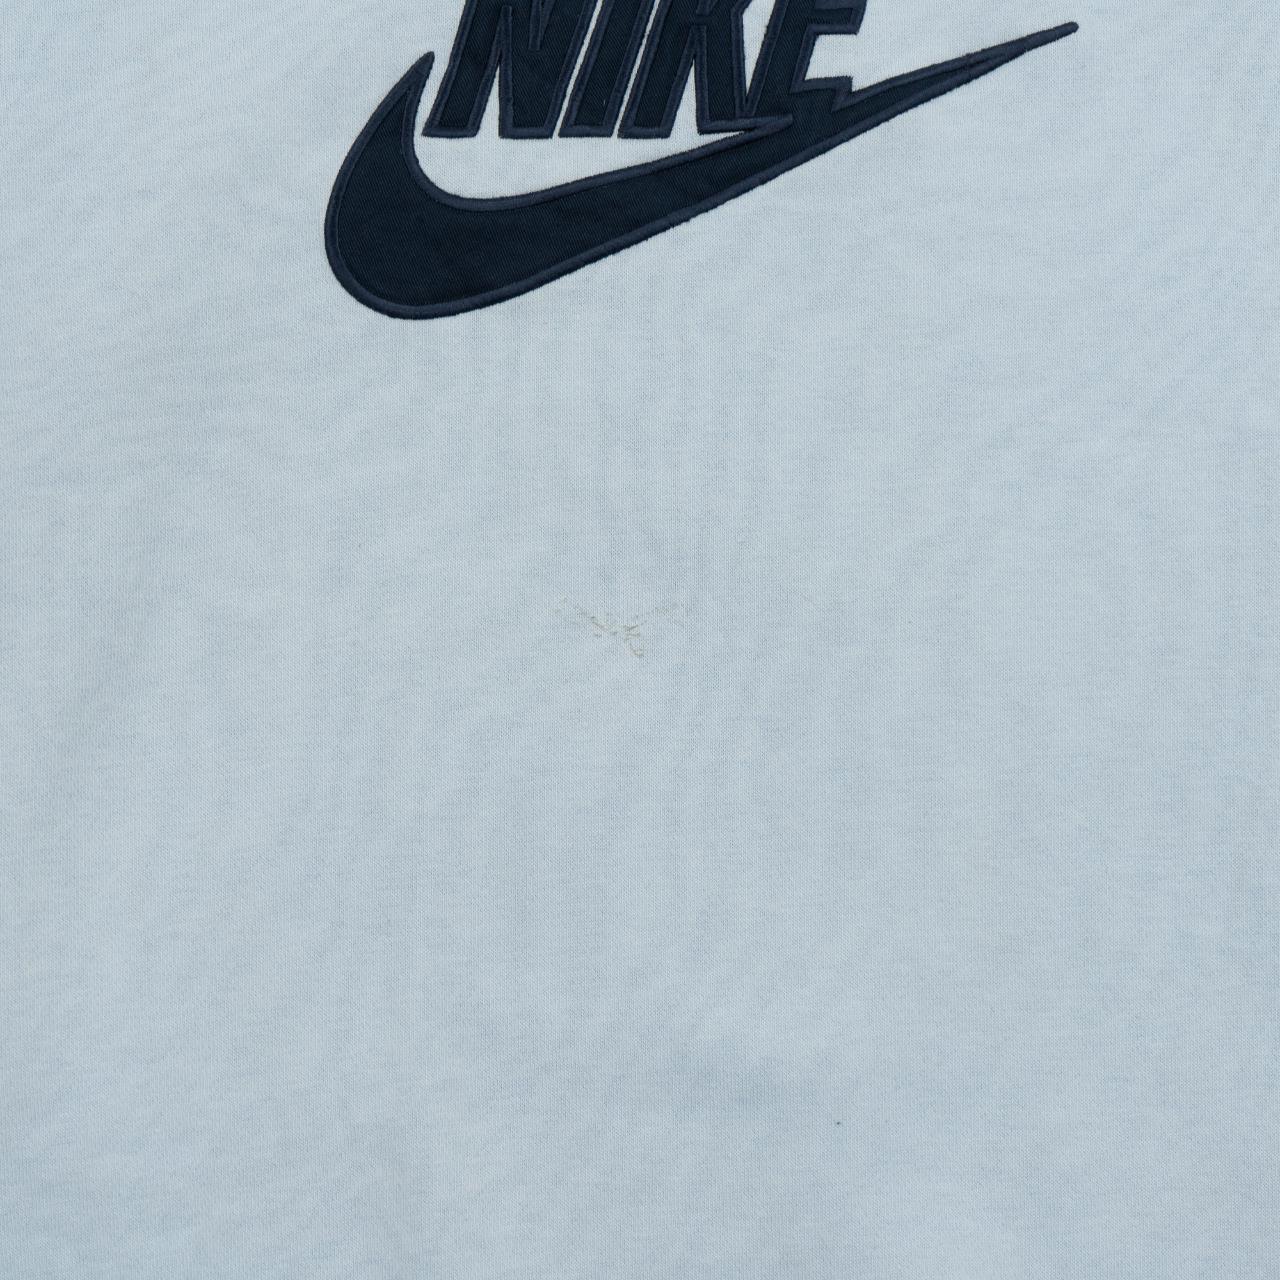 Vintage Nike Sweatshirt Size L - Known Source